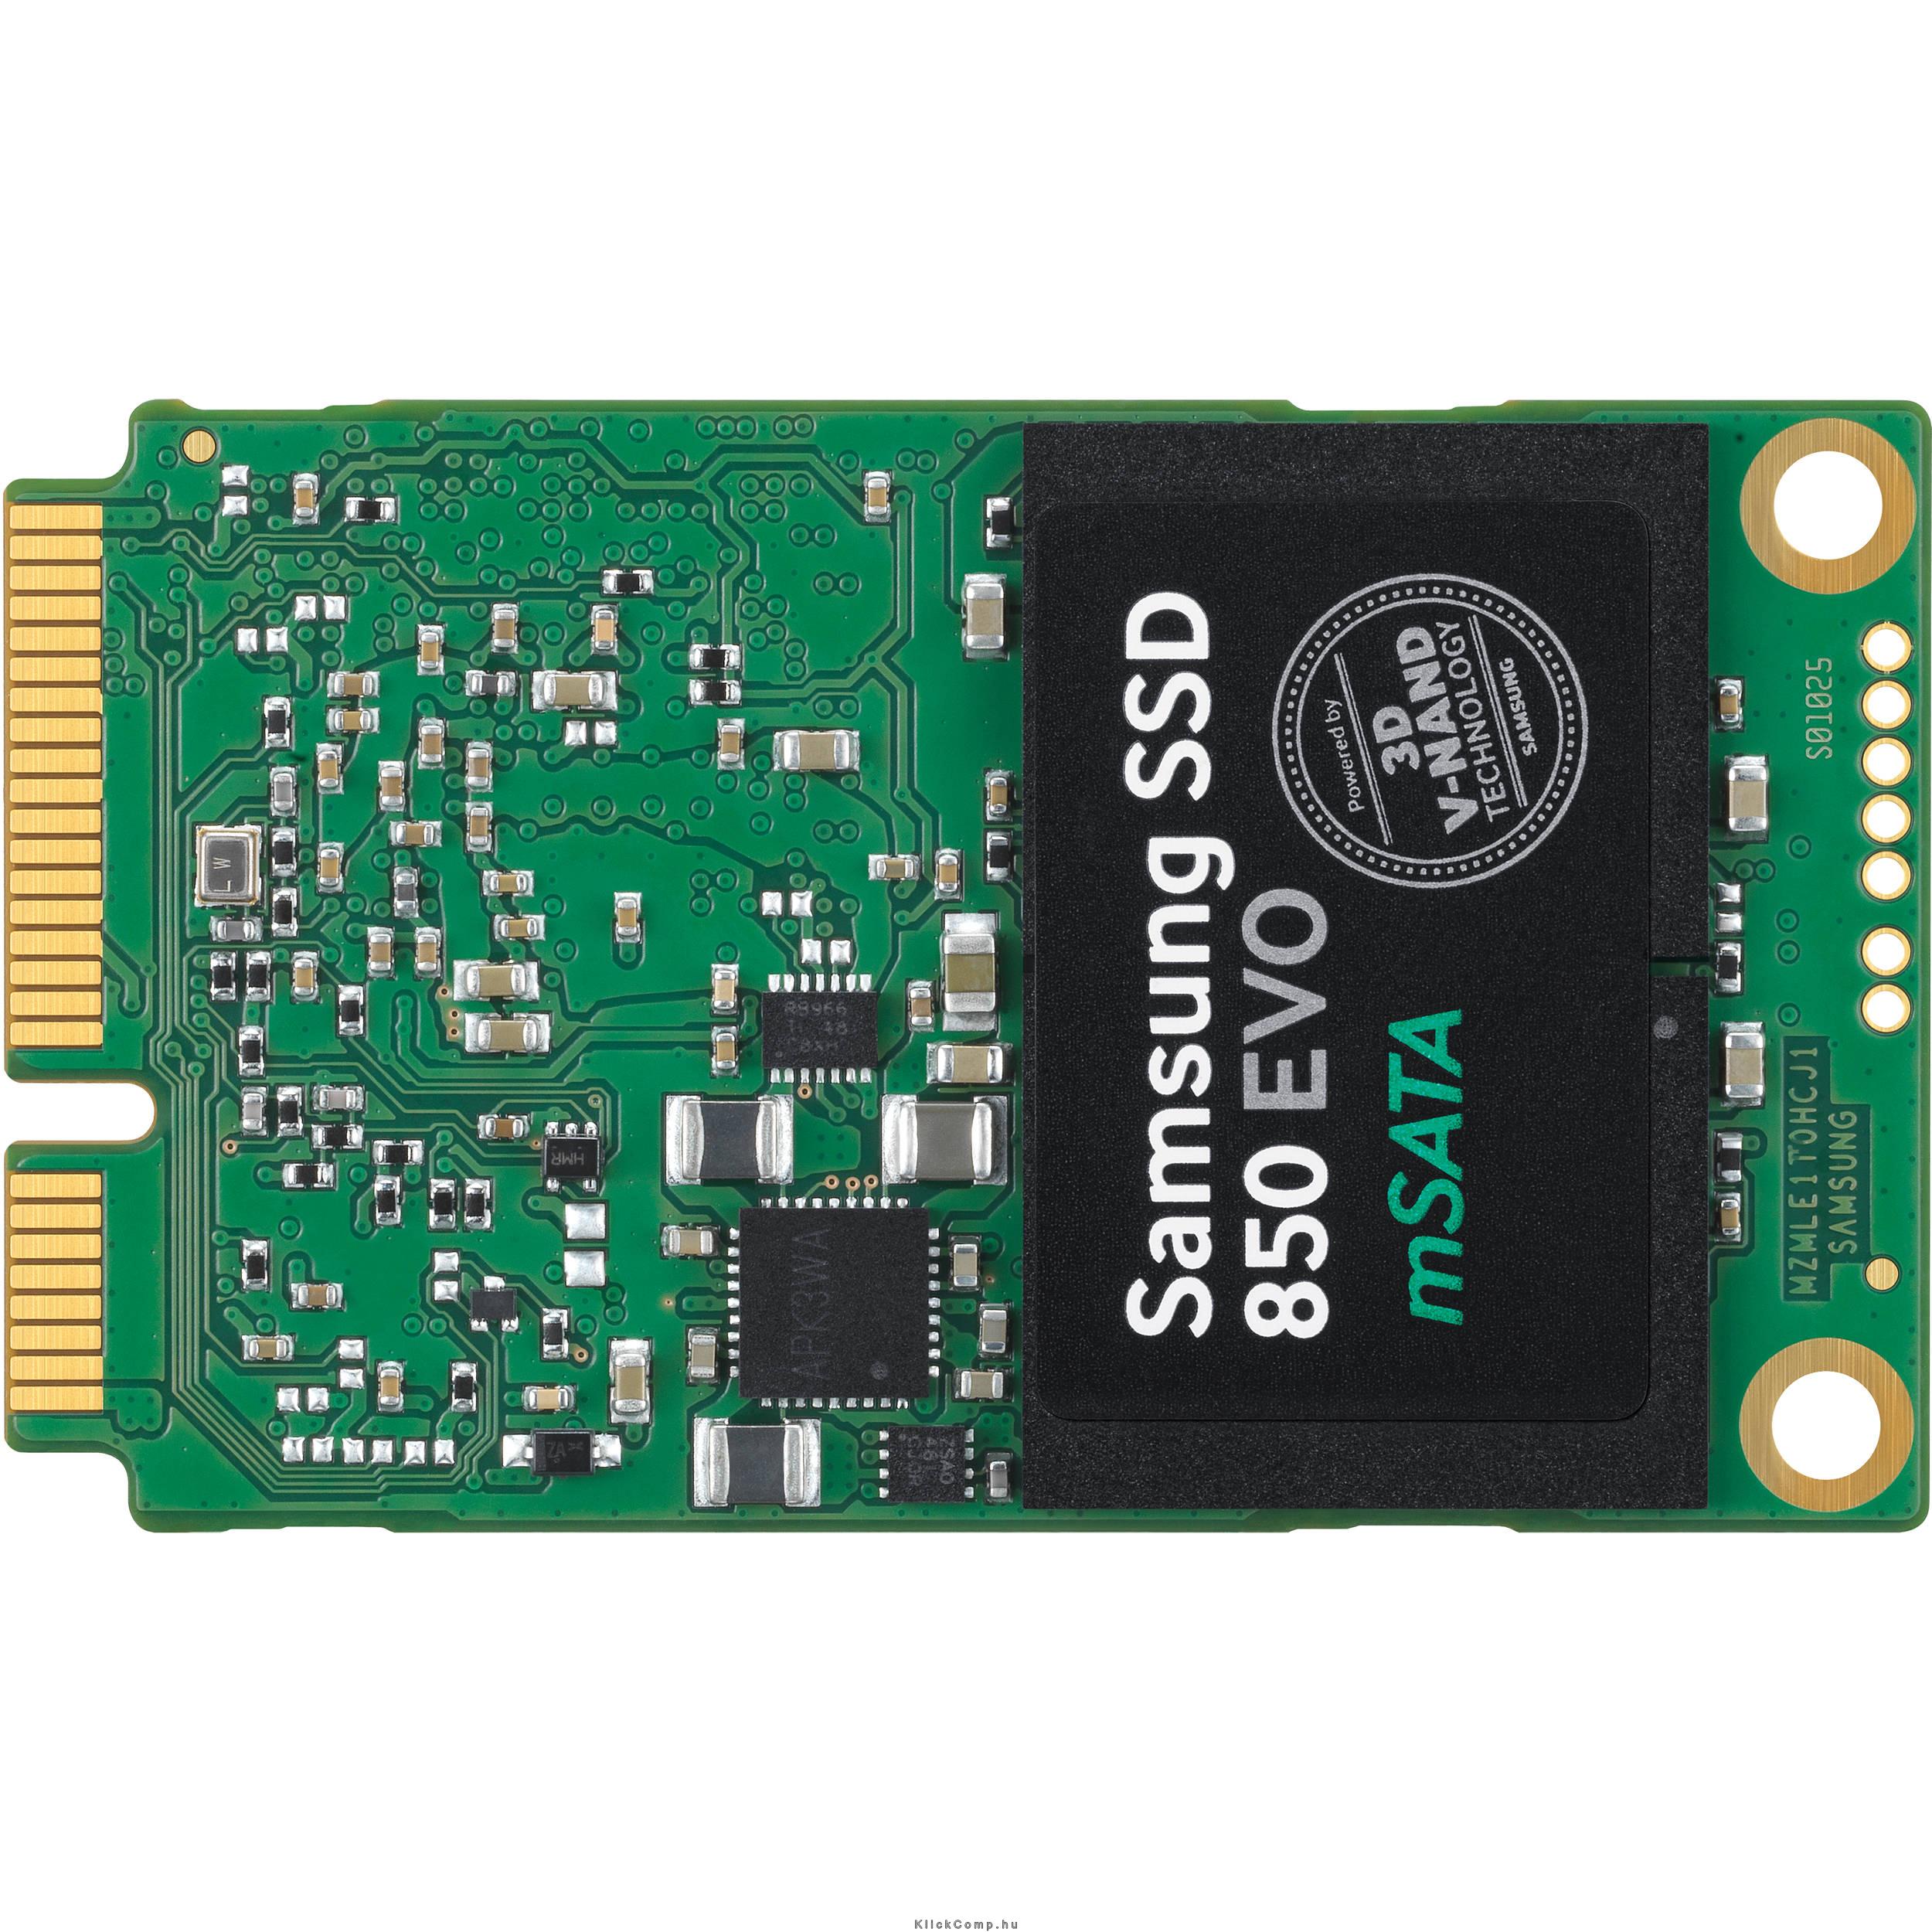 1TB SSD mSATA Samsung EVO 850 fotó, illusztráció : MZ-M5E1T0BW